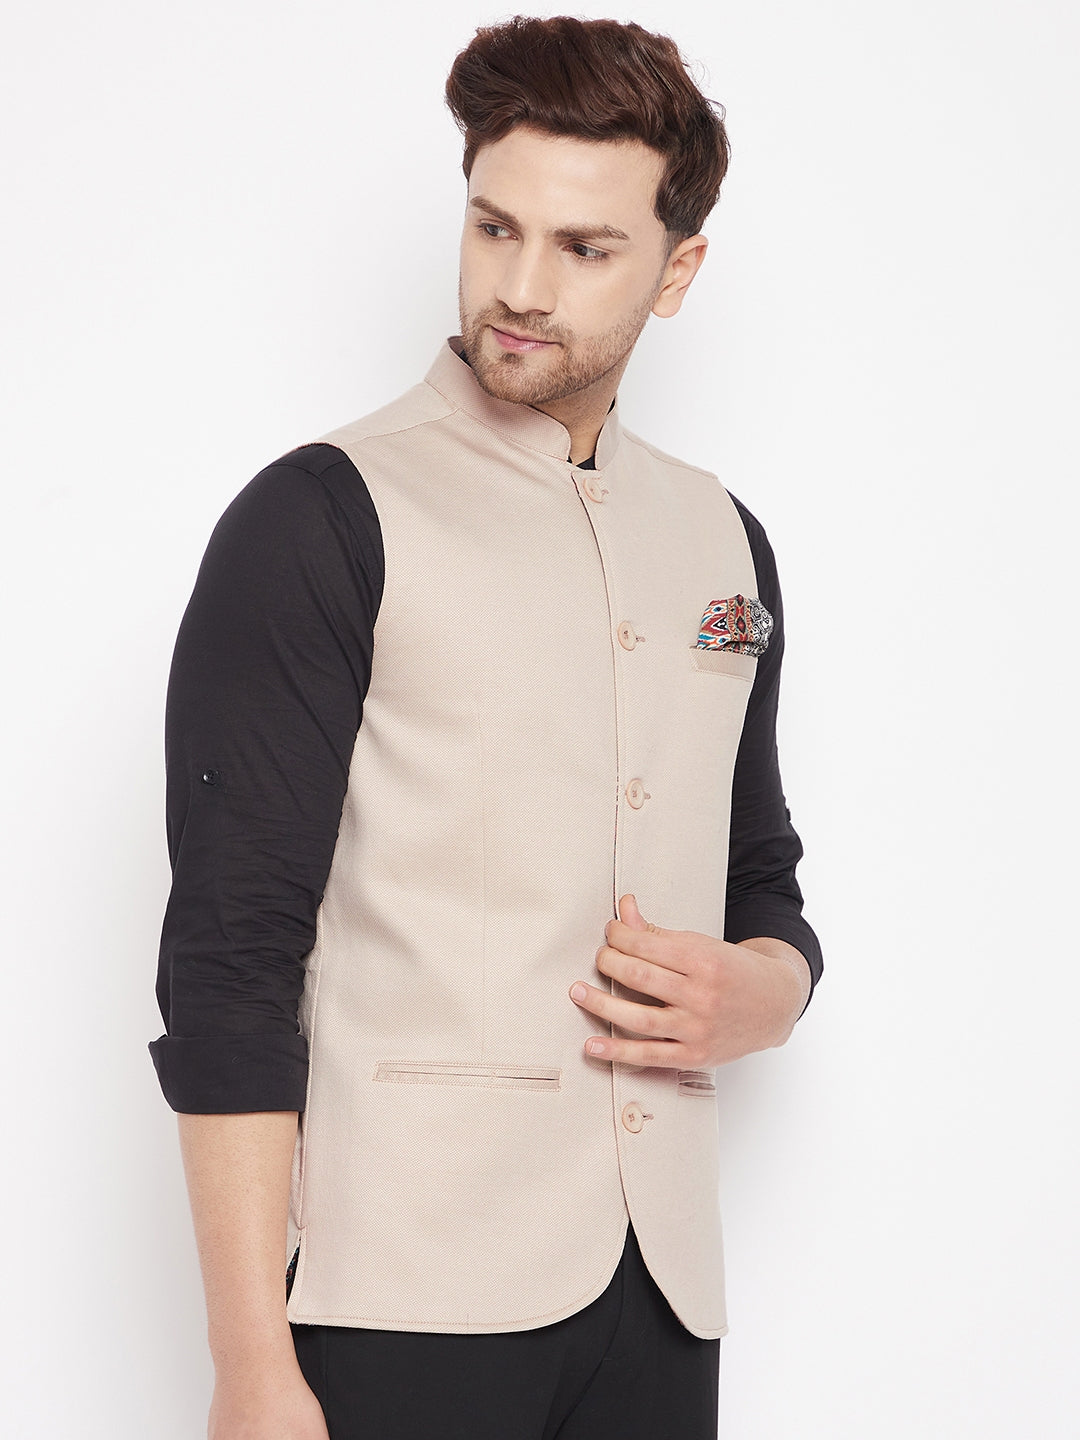 Men's Cream Color Woven Nehru Jacket - Even Apparels